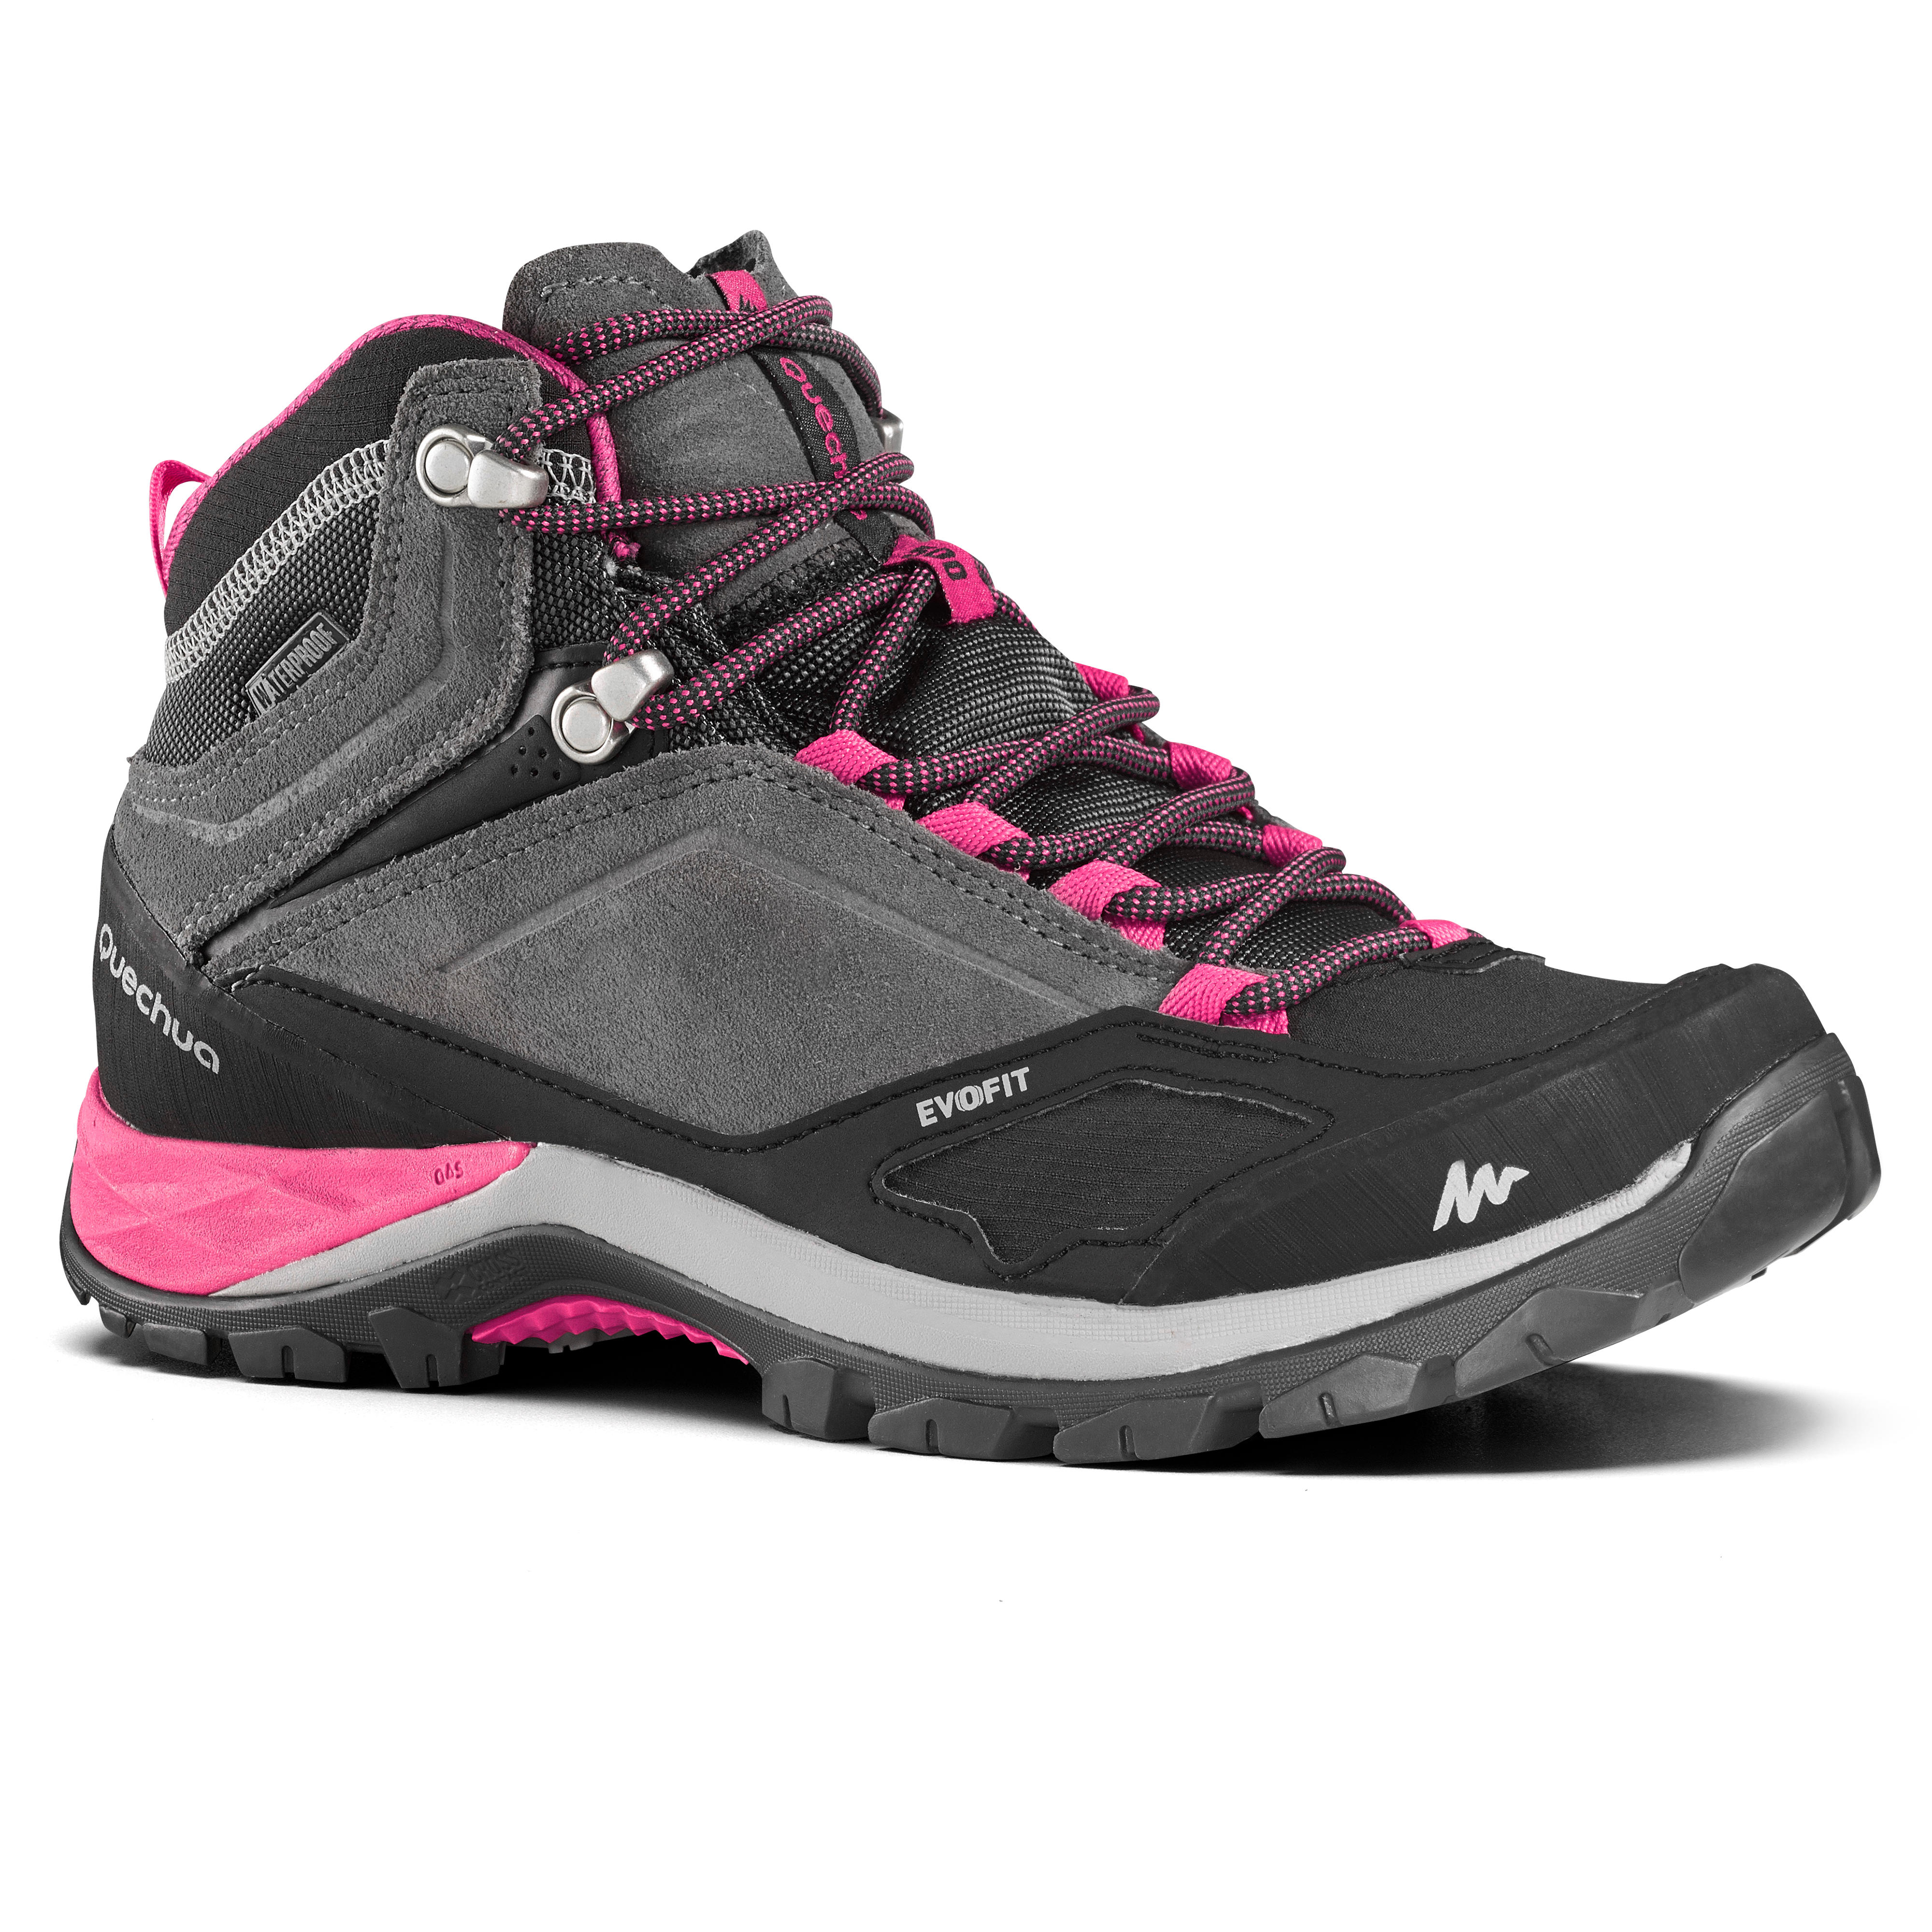 CAMEL CROWN Hiking Shoes WoWomen Waterproof Lightweight Low Top Walking Shoes Outdoor Backpacking Trekking Trails 